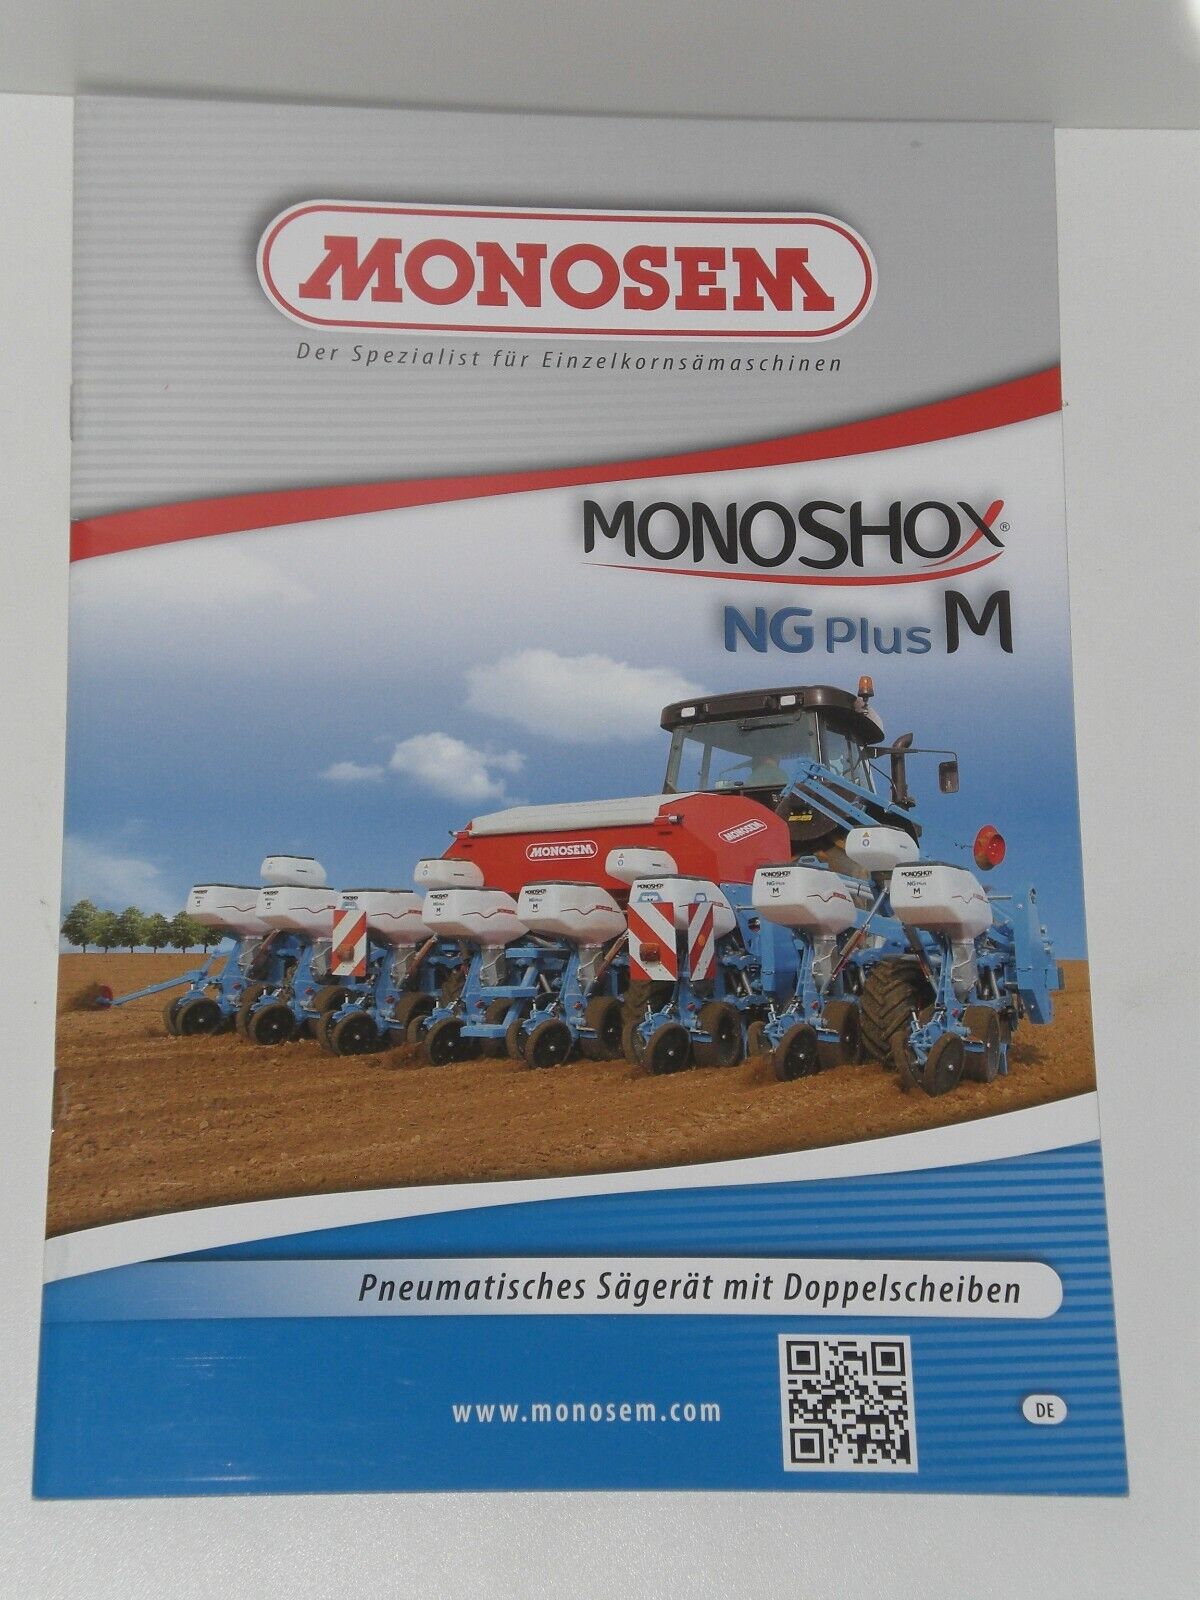 MONOSEM MONOSHOX NG Plus M pneumatic sawing machine brochure from 07/2015 (5330)